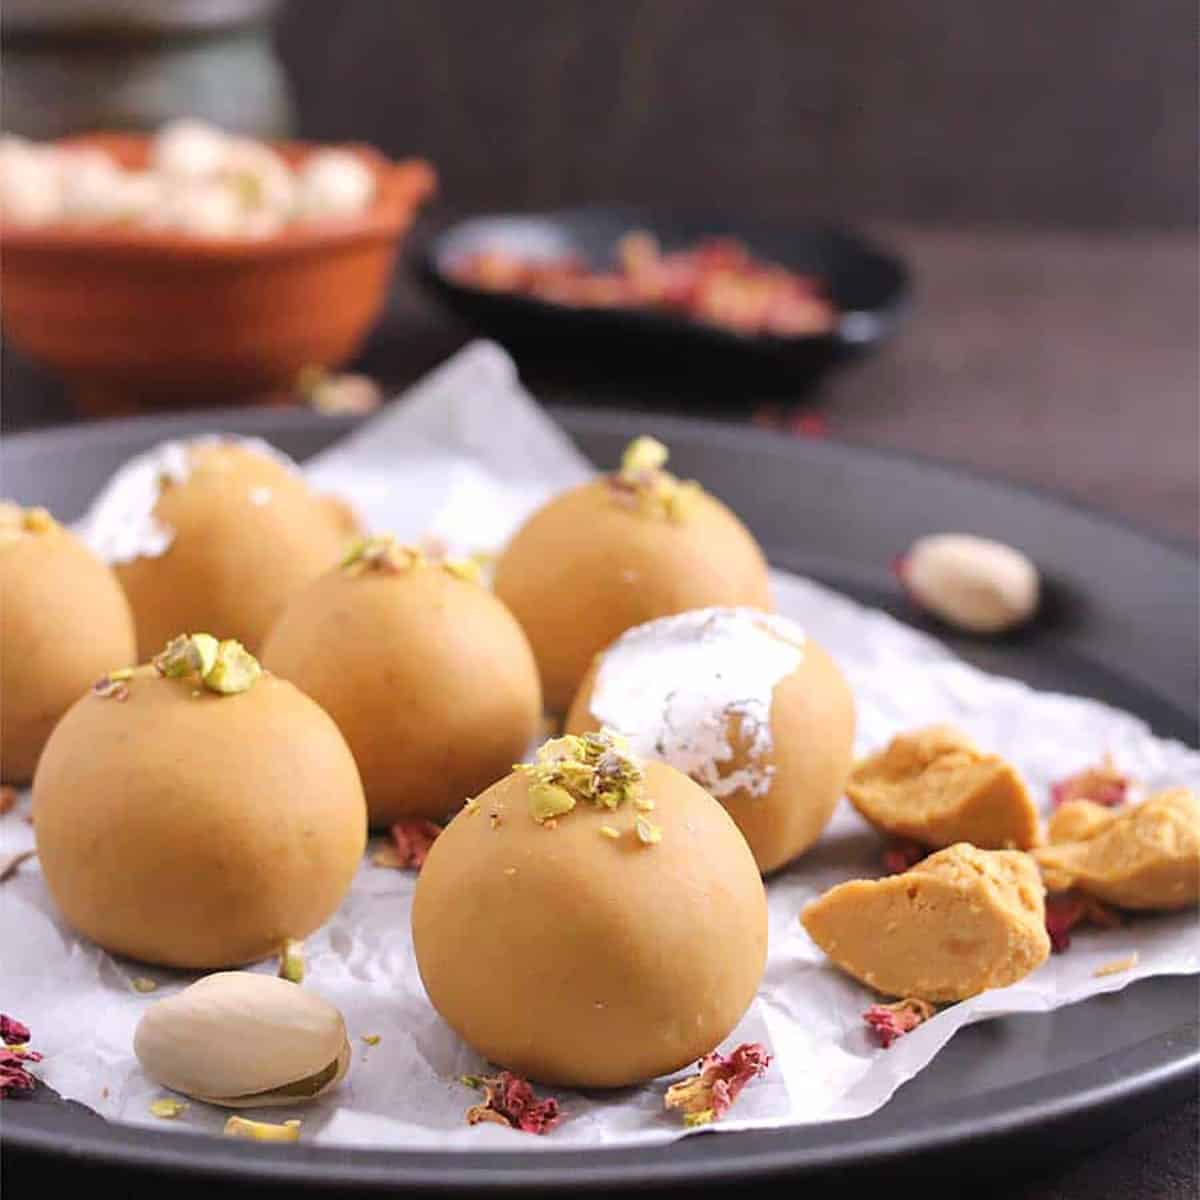 Best besan ladoo garnished with pistachios and vark. Indian sweet besan ke laddu.